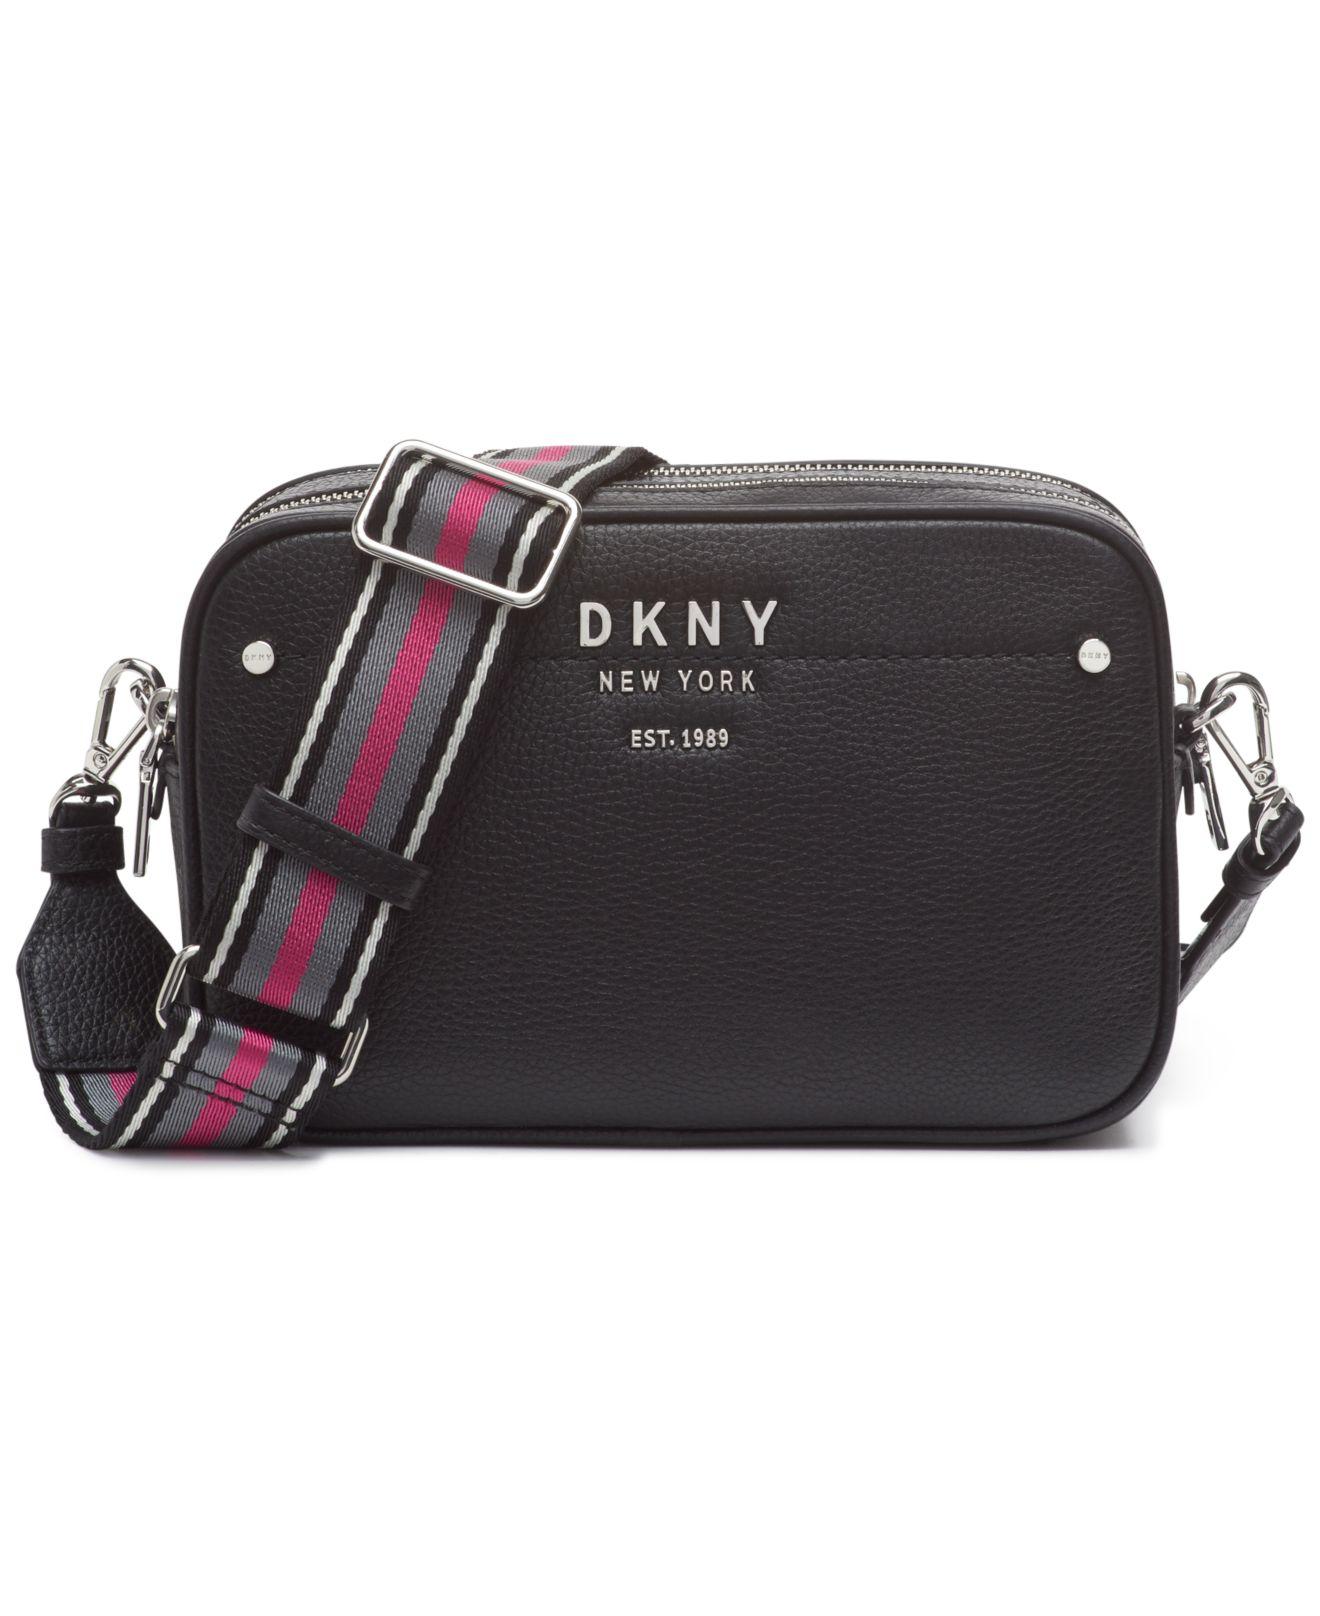 DKNY Leather Erin Camera Bag in Black / Silver (Black) - Lyst